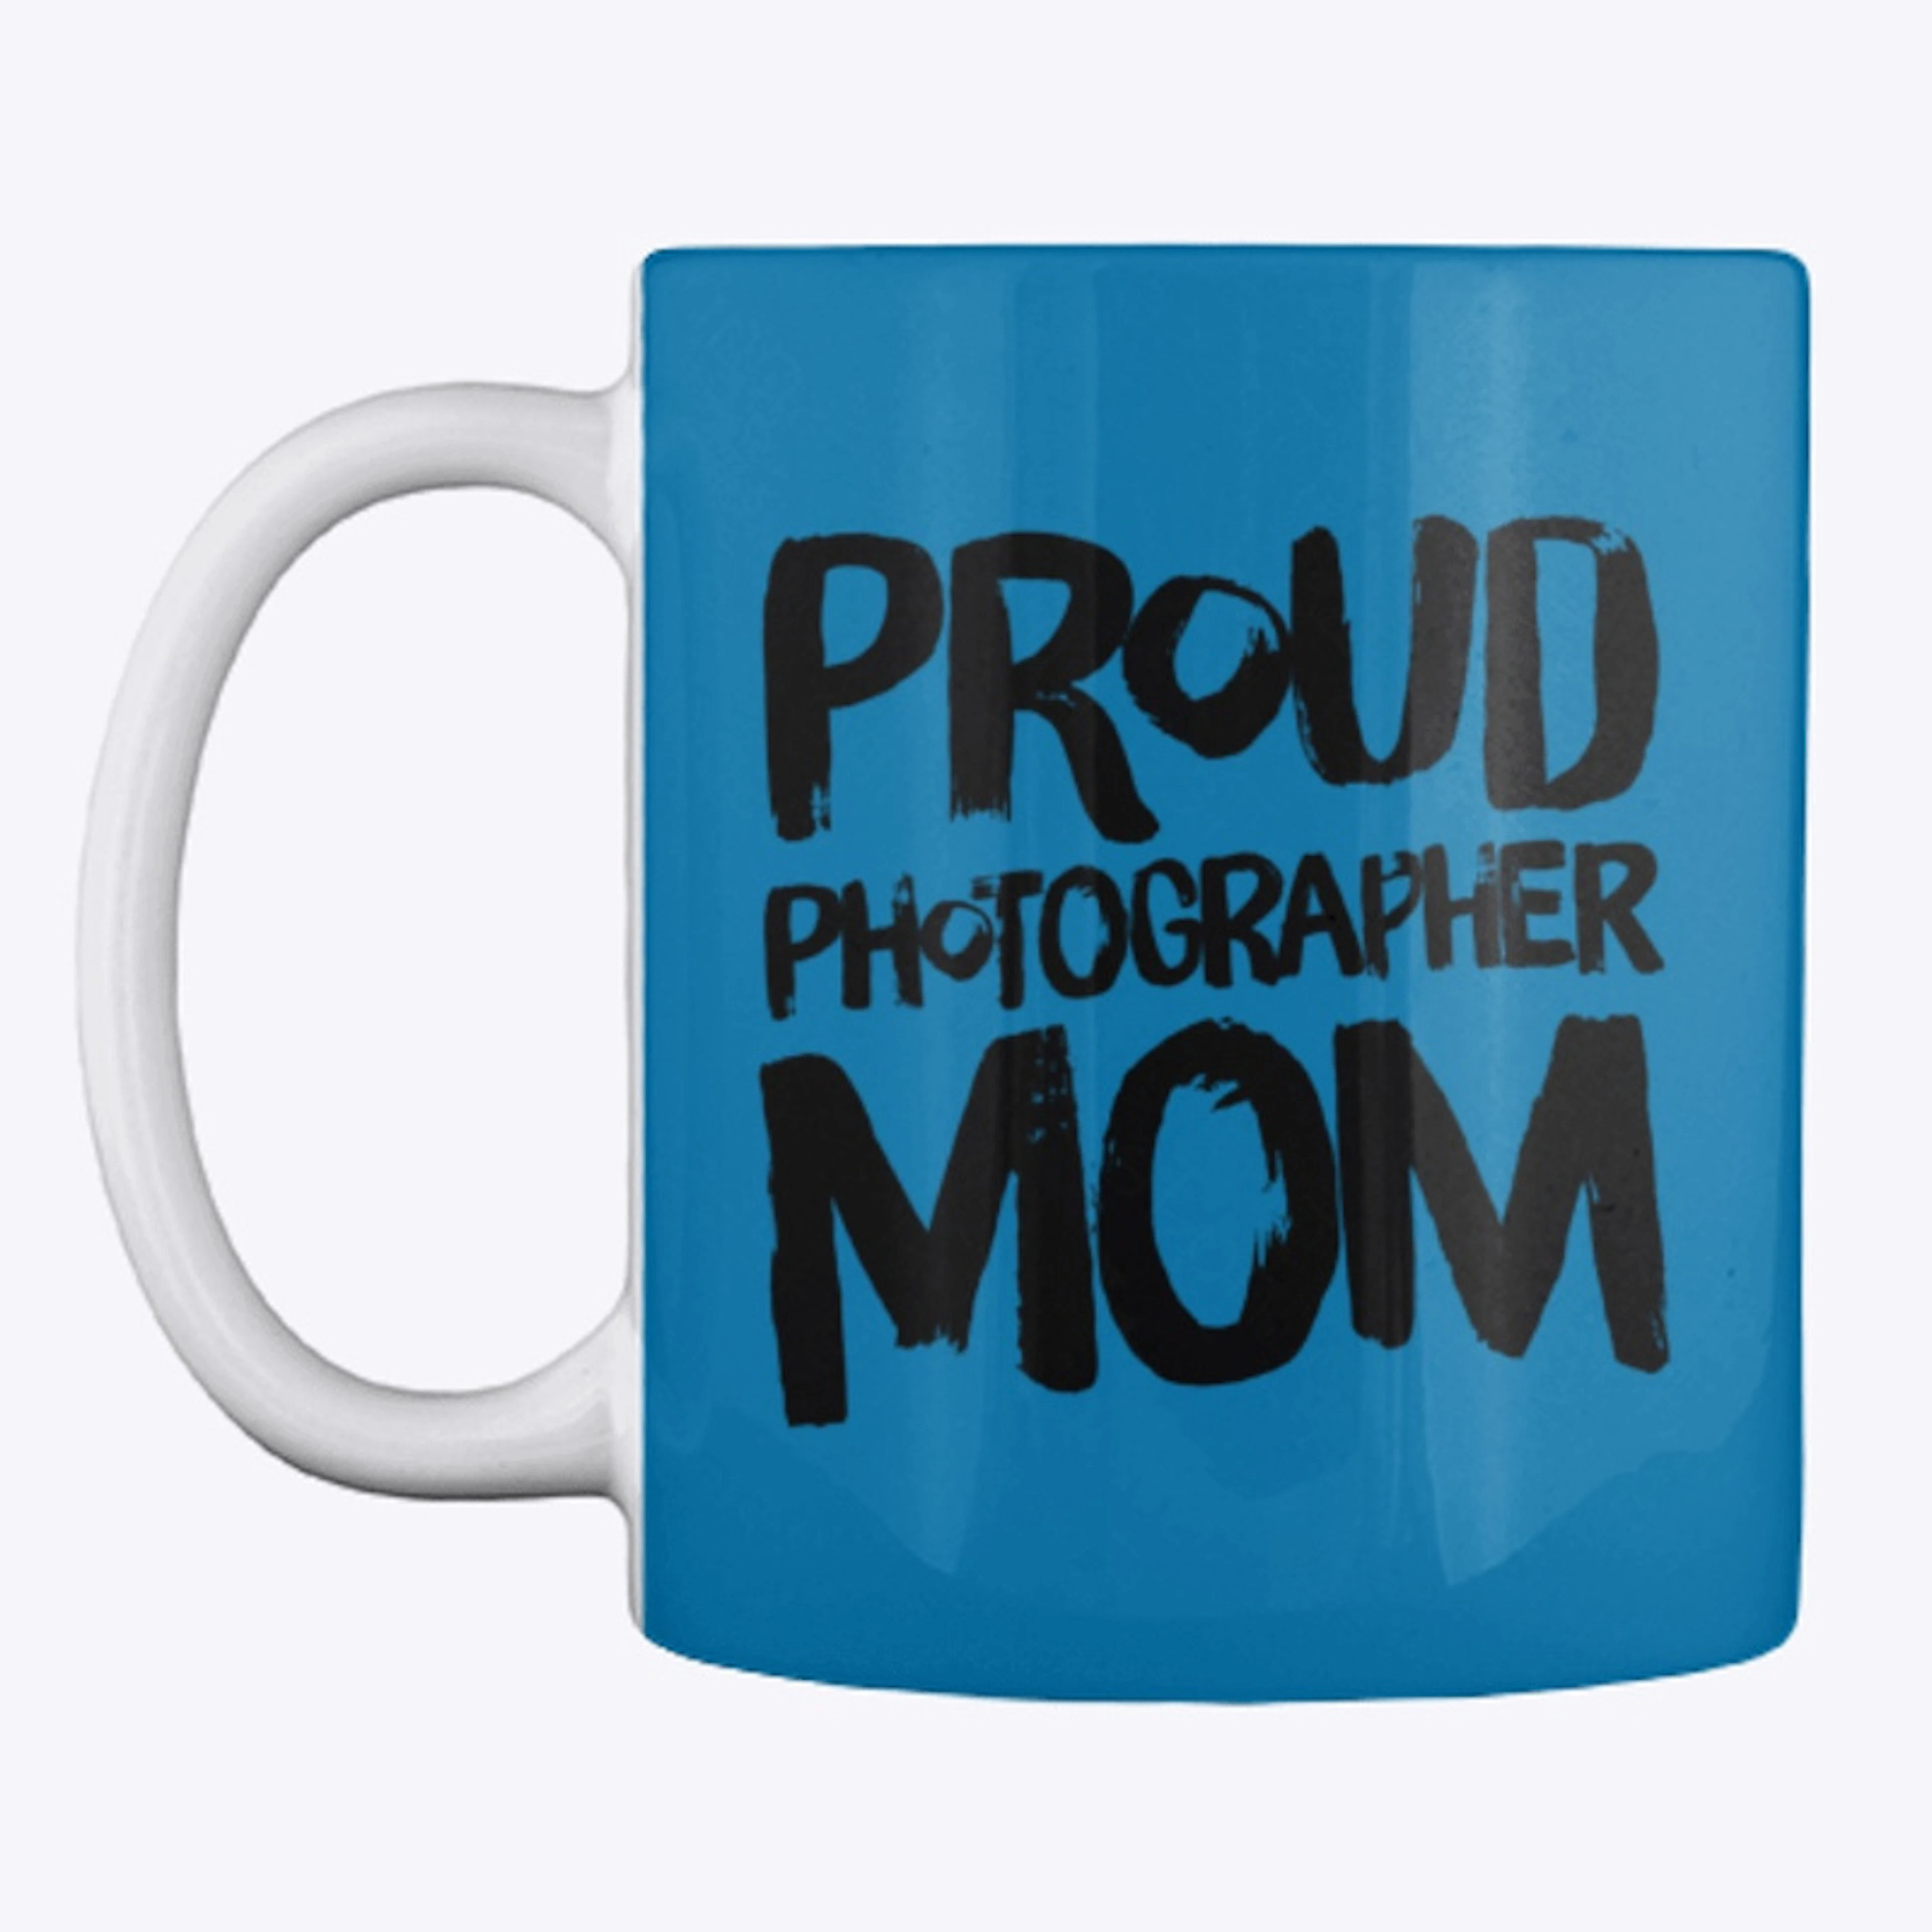 PROUD PHOTOGRAPHER MOM